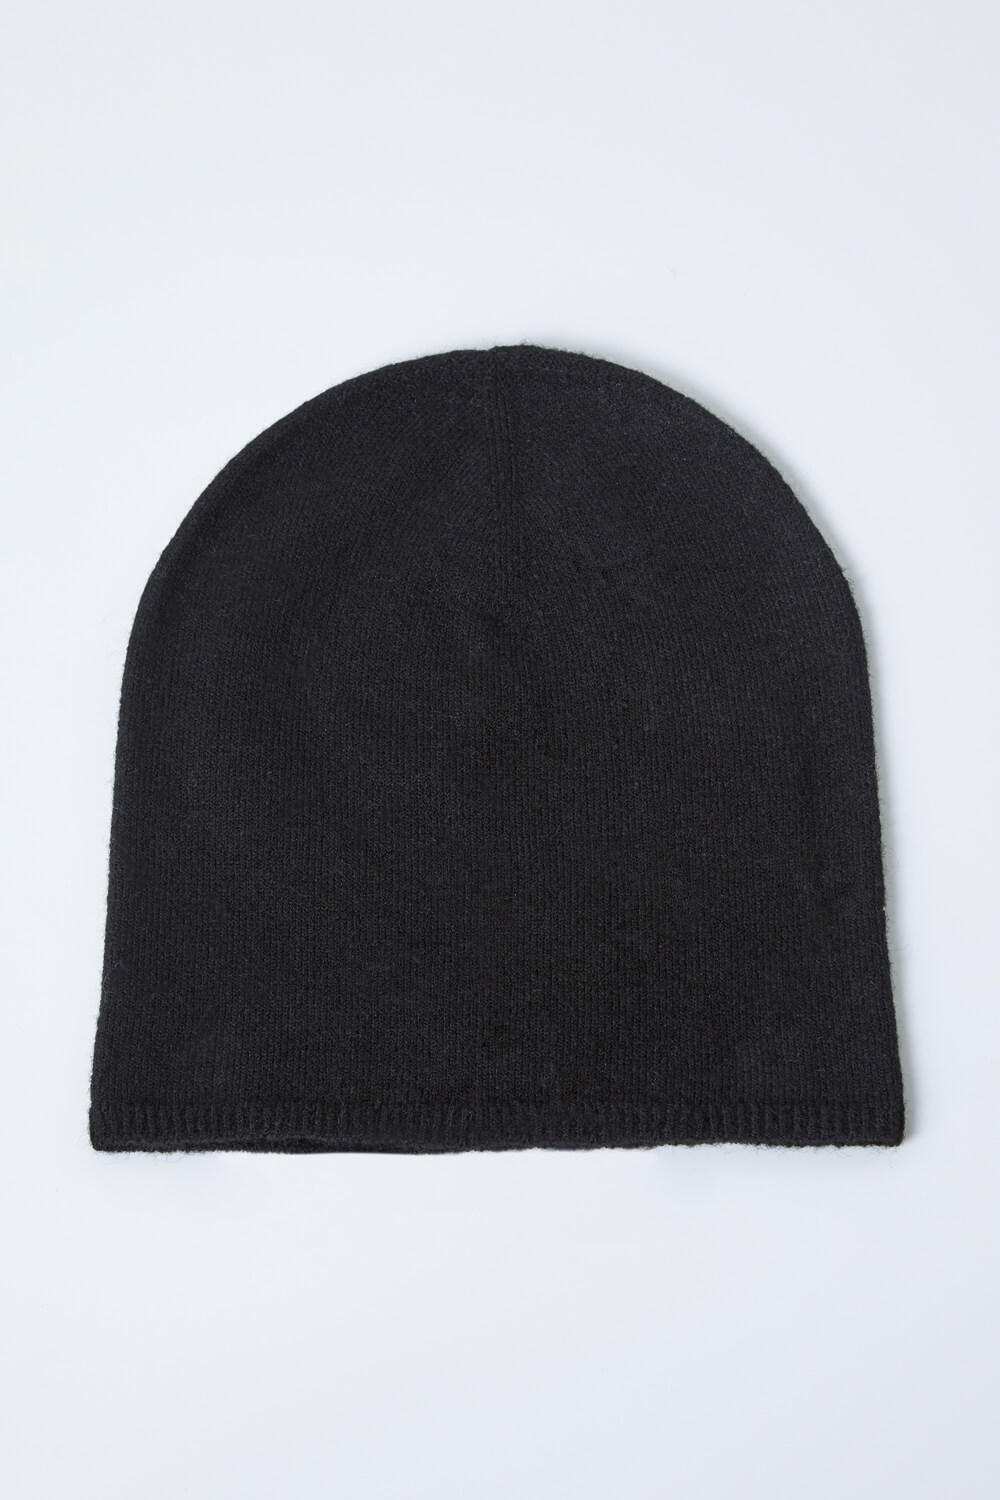 Black Soft Stretch Knit Beanie Hat, Image 4 of 4